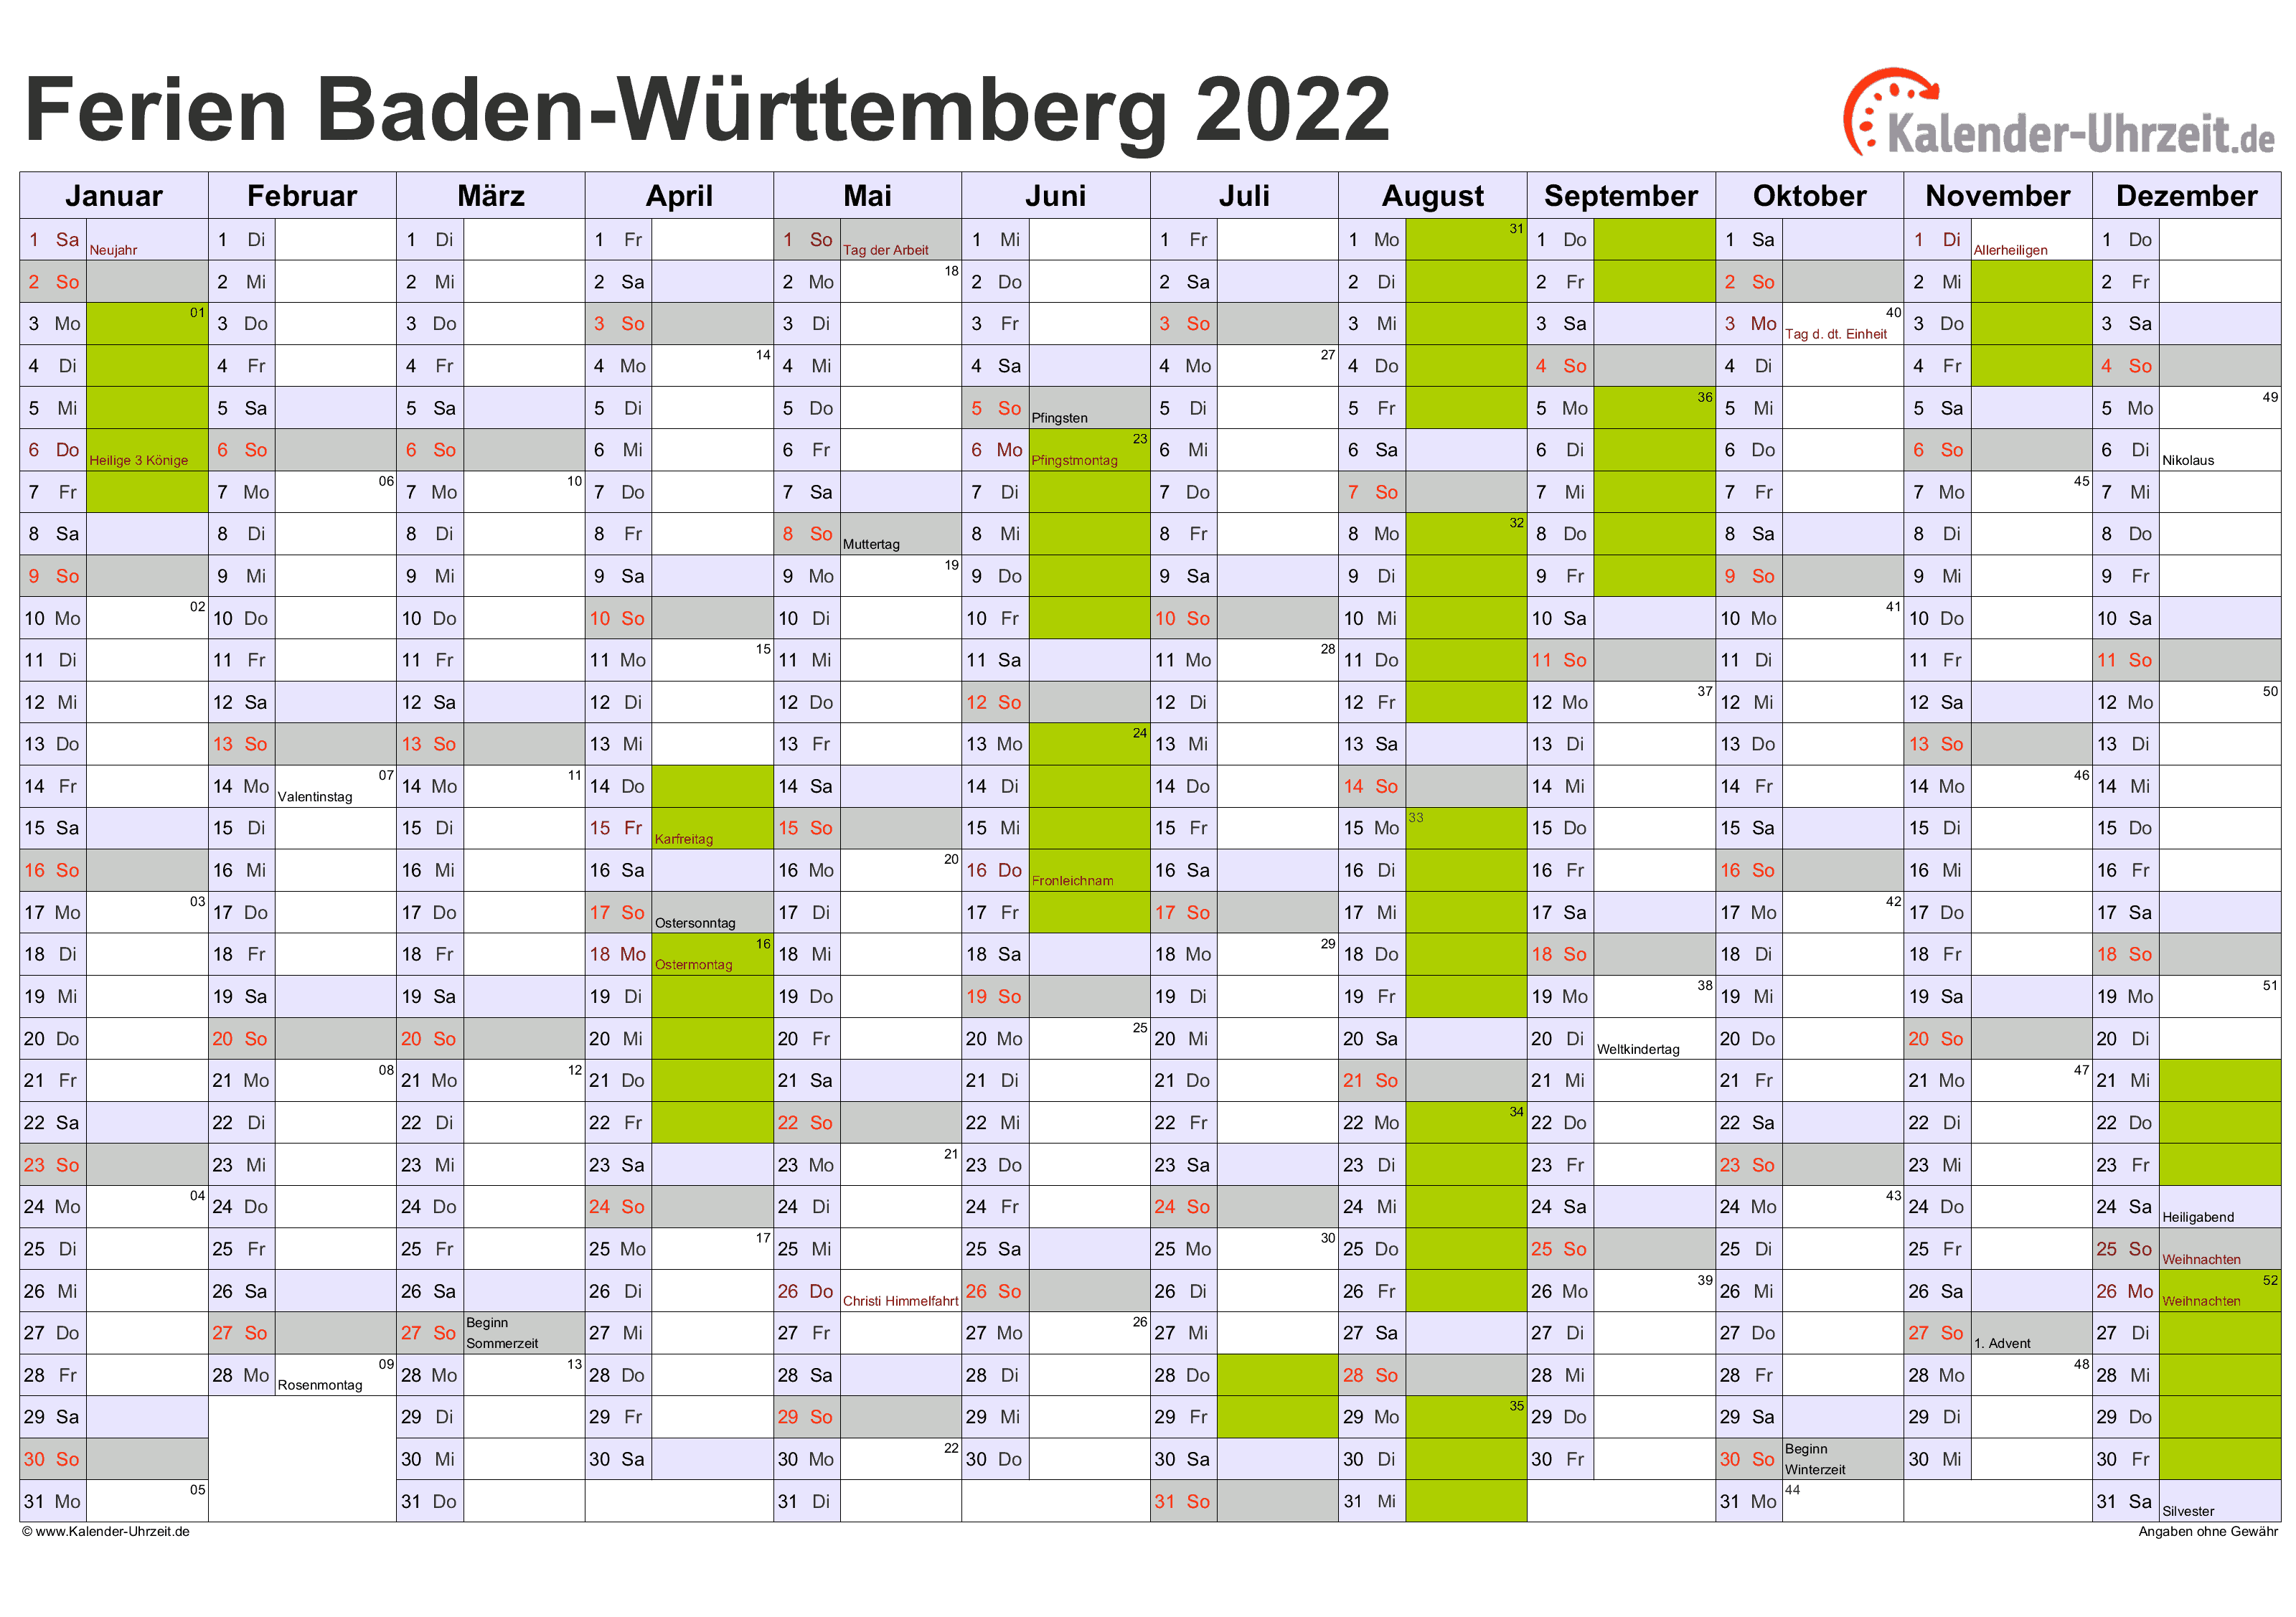 Source: www.kalender-uhrzeit.de.